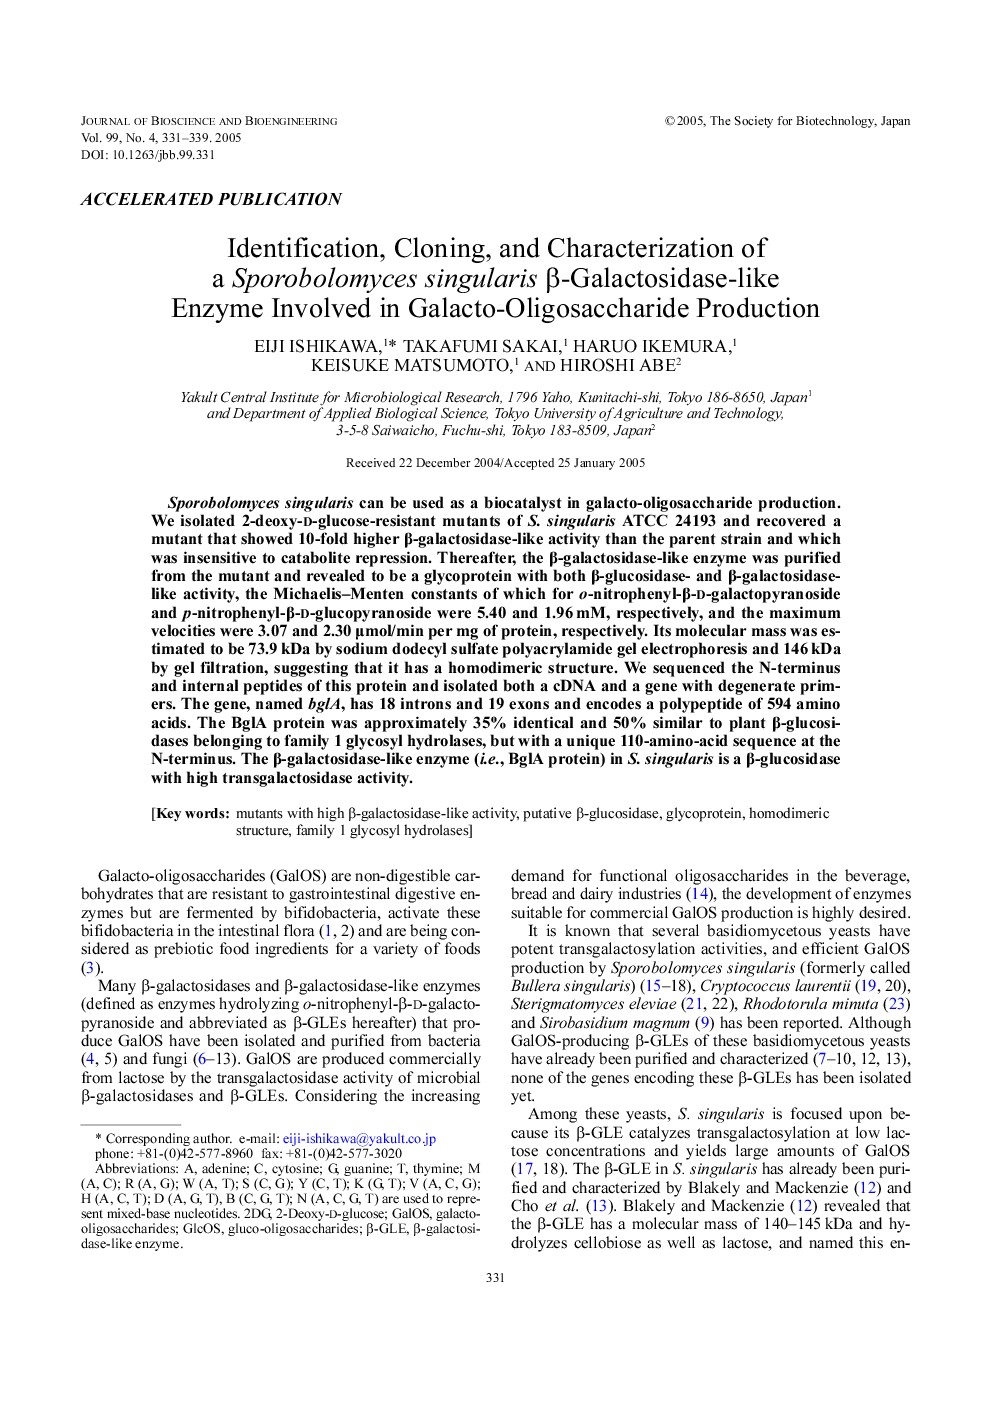 Identification, cloning, and characterization of a Sporobolomyces singularis Î²-galactosidase-like enzyme involved in galacto-oligosaccharide production